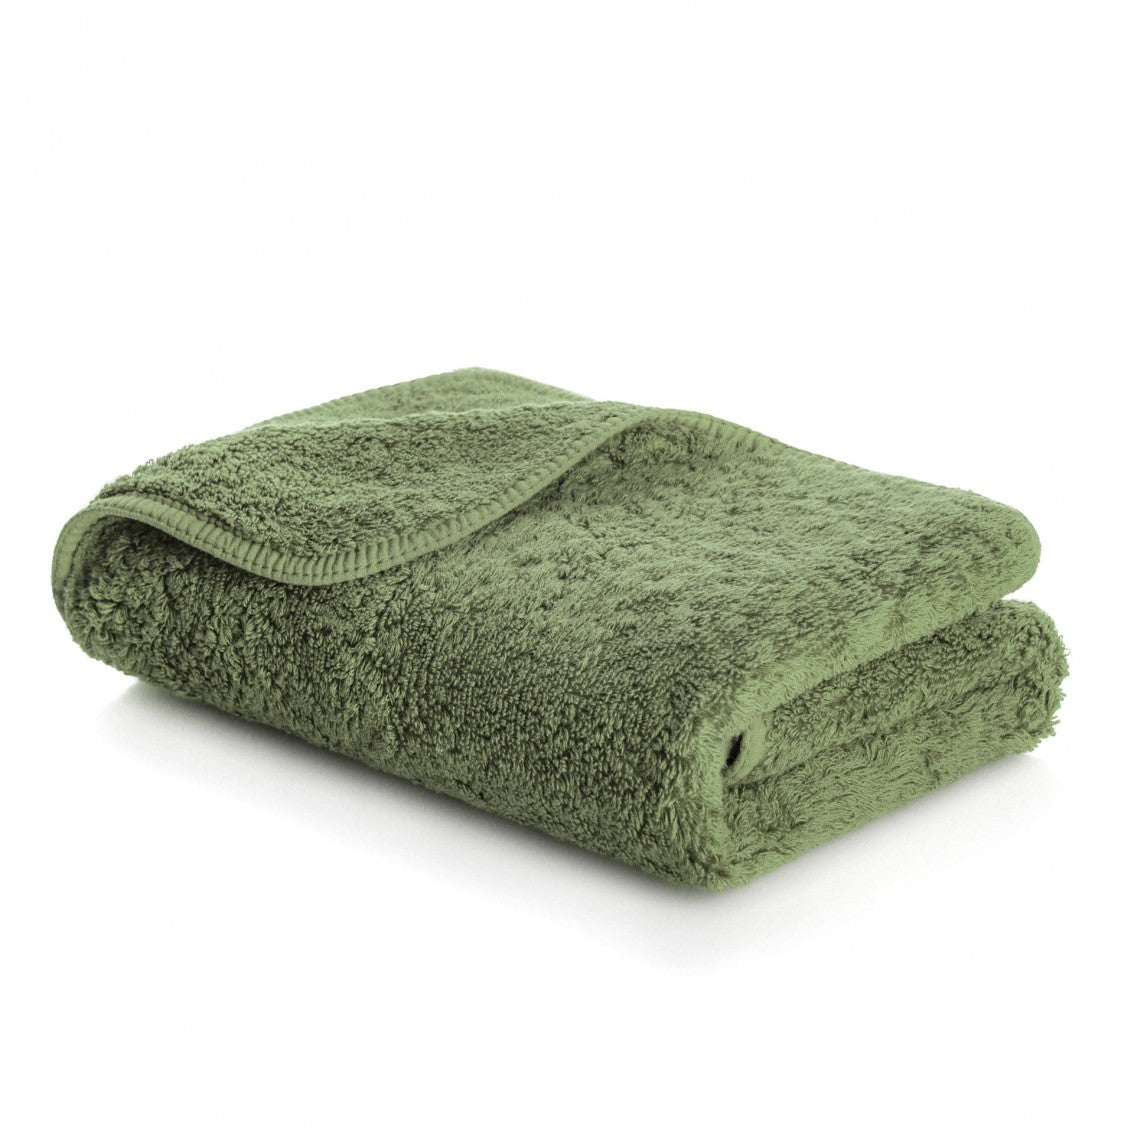 Folded Graccioza Long Double Loop Bath Towel in Jade Color